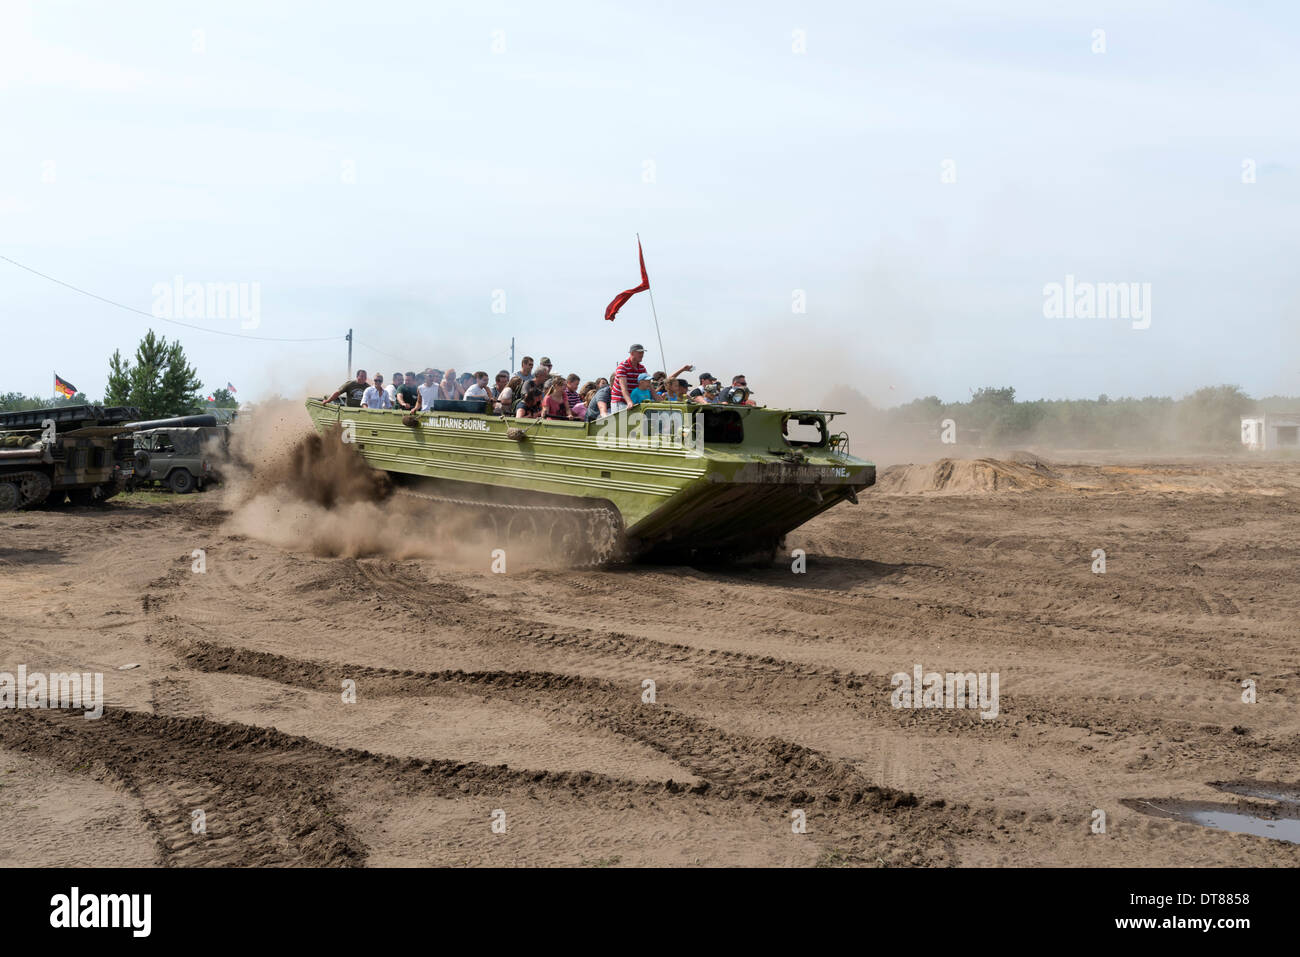 'X International meeting of military vehicles TRACKS AND HORSESHOE' in Borne Sulinowo, Poland Stock Photo